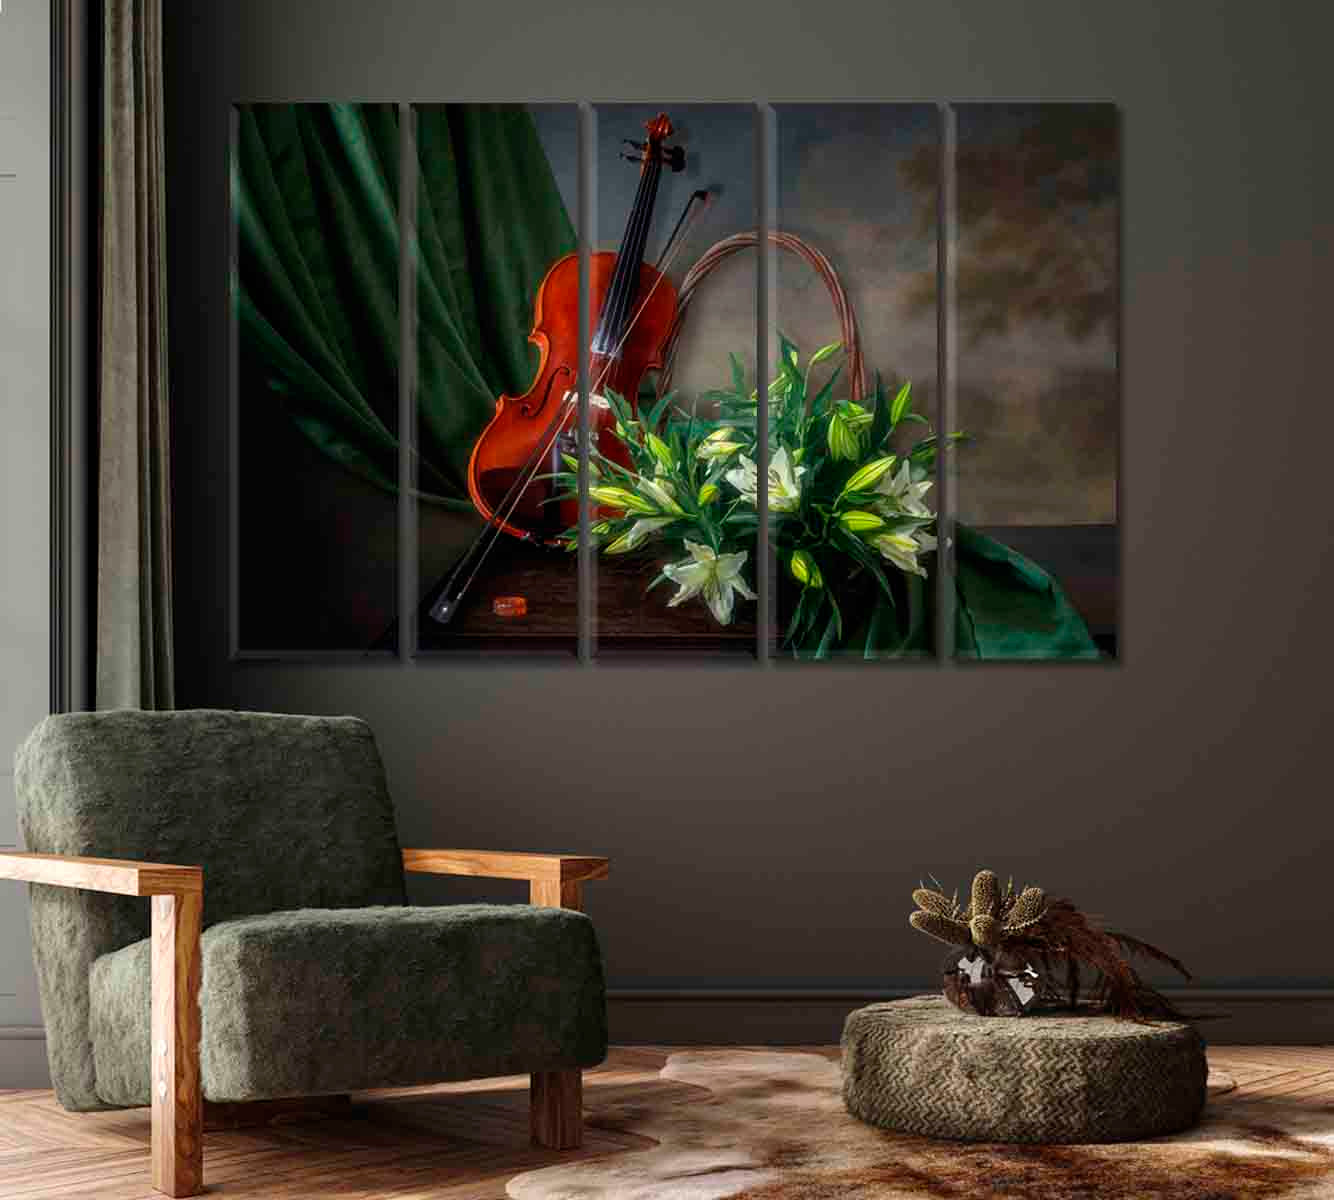 Still Life Violin and White Lily Canvas Print-Canvas Print-CetArt-1 Panel-24x16 inches-CetArt